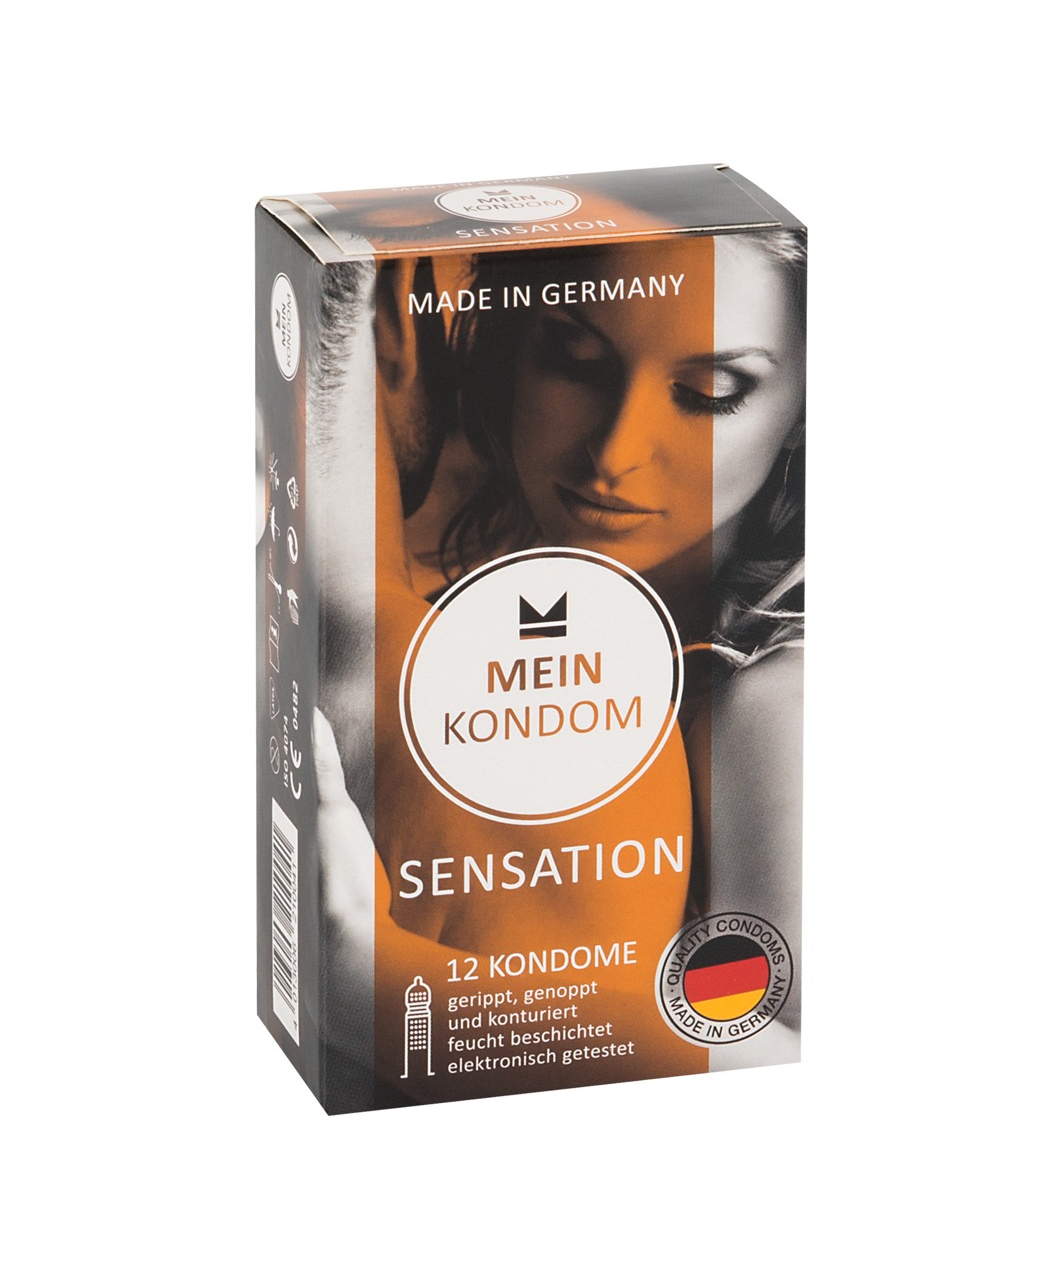 Mein Kondom Sensation (12 pcs)